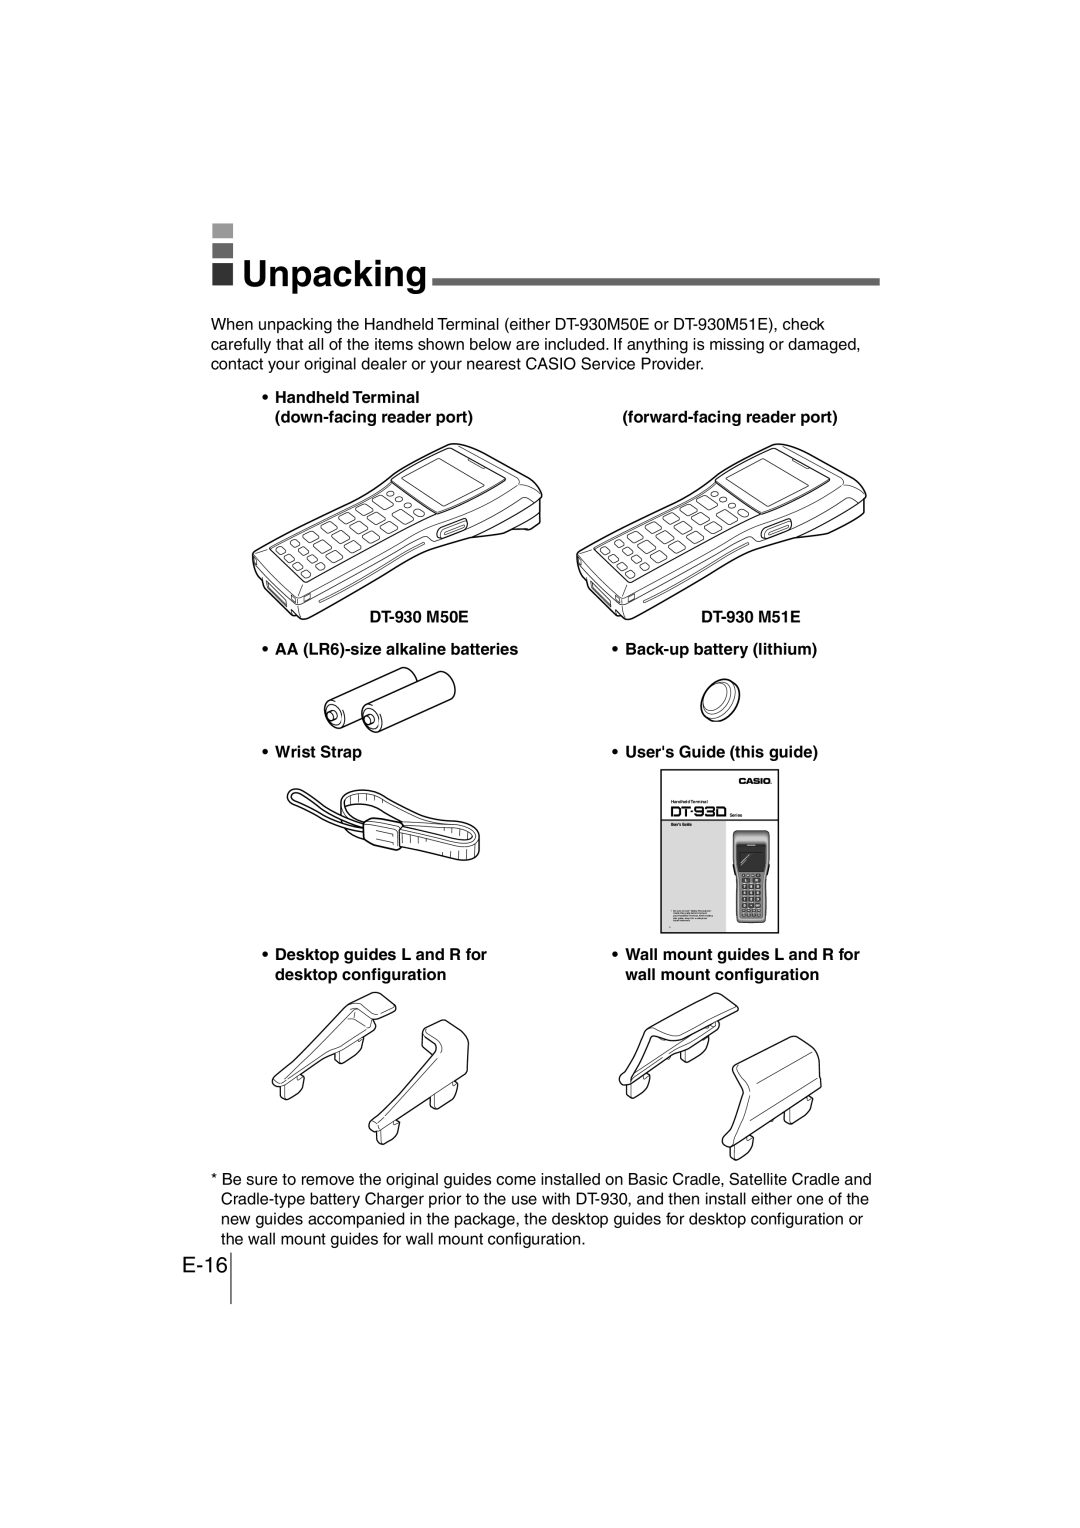 Casio DT-930 manual Unpacking, E-16 